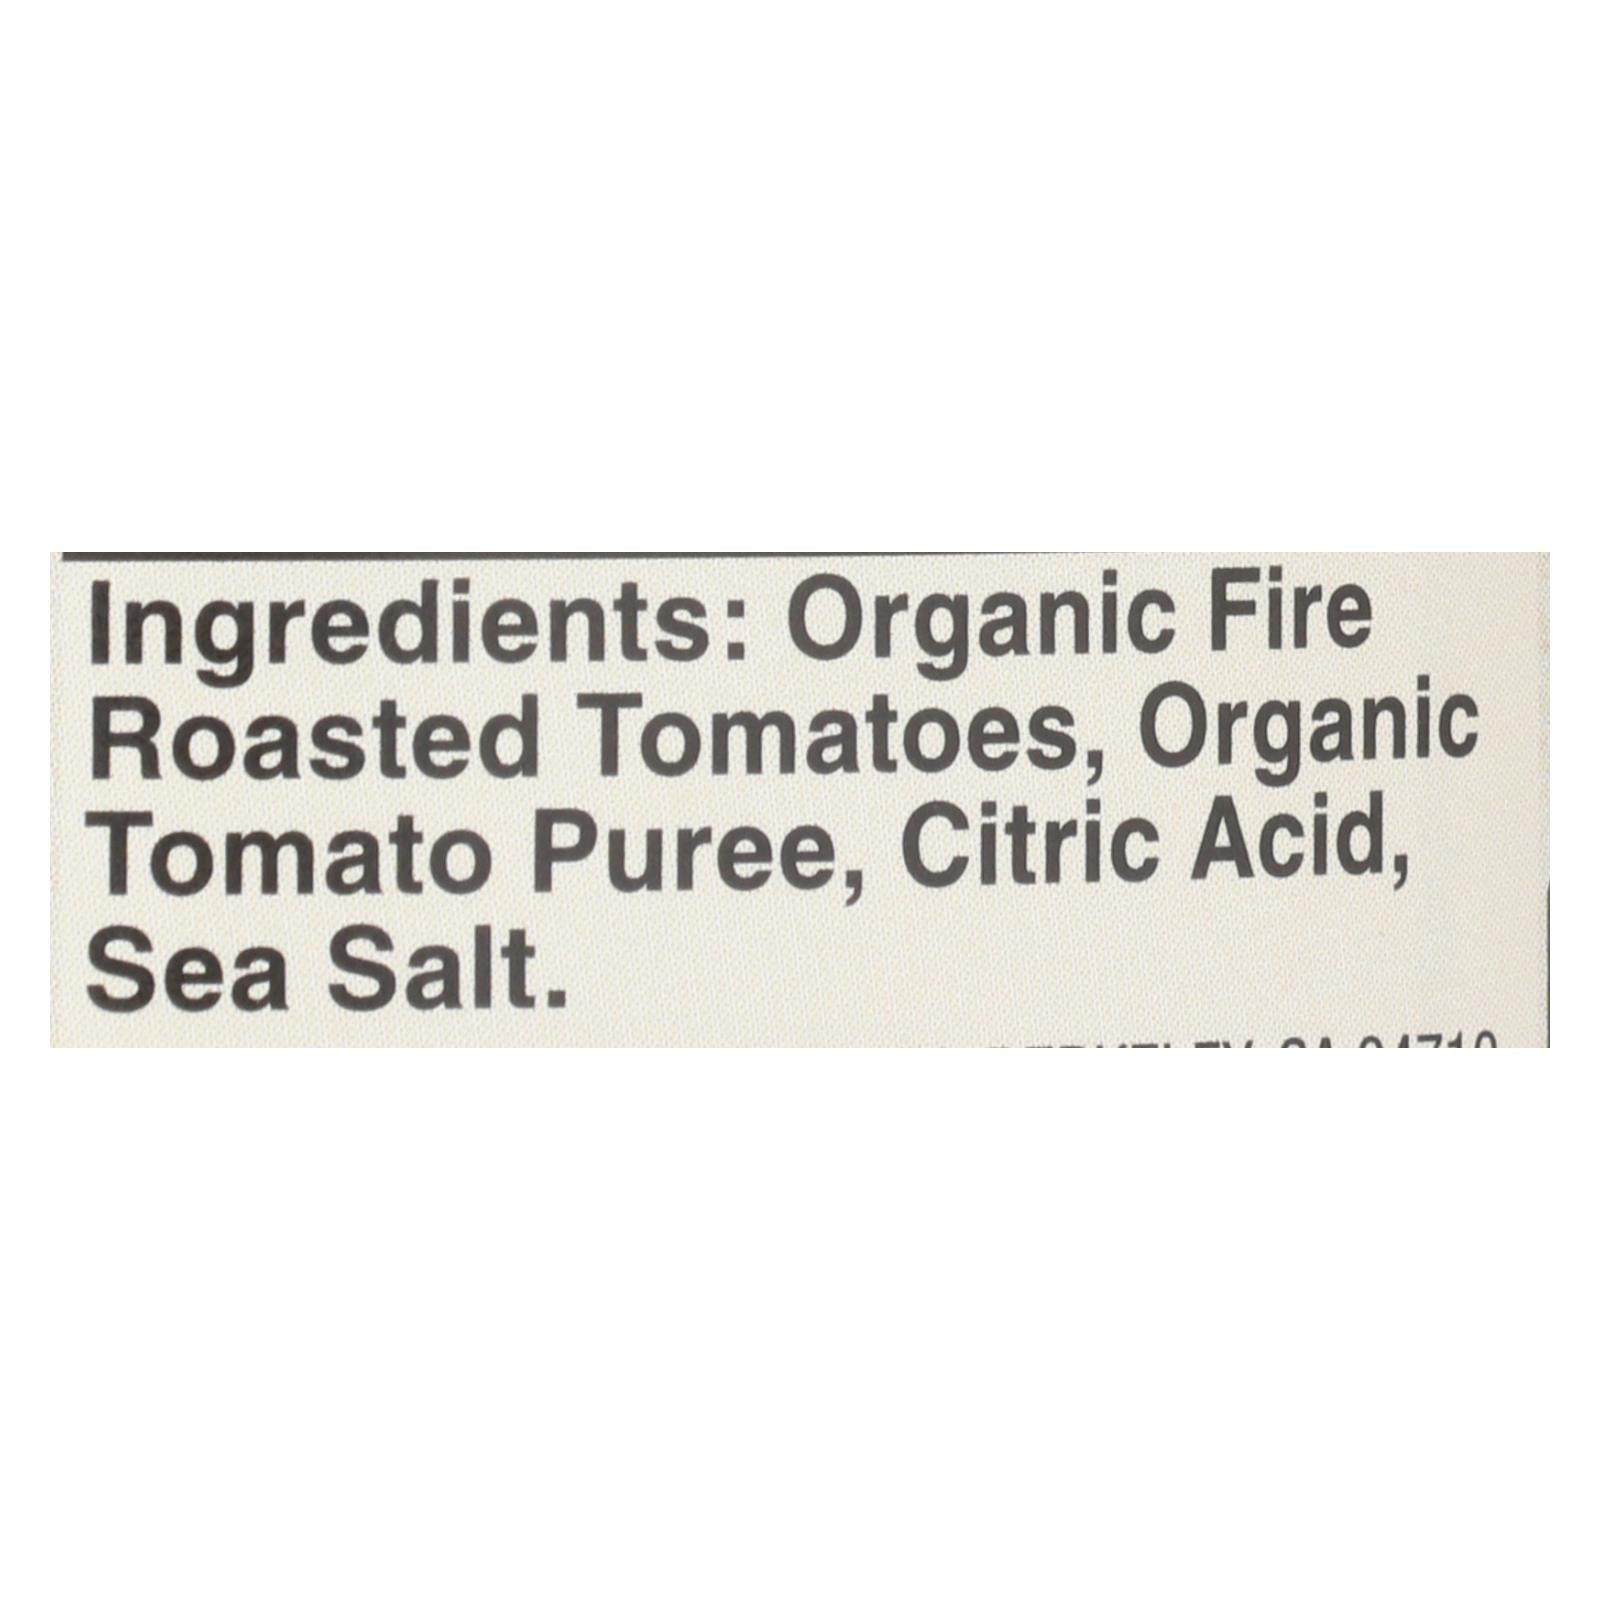 Muir Glen Fire Roasted Crushed Tomato - Tomato - Case Of 12 - 28 Oz.